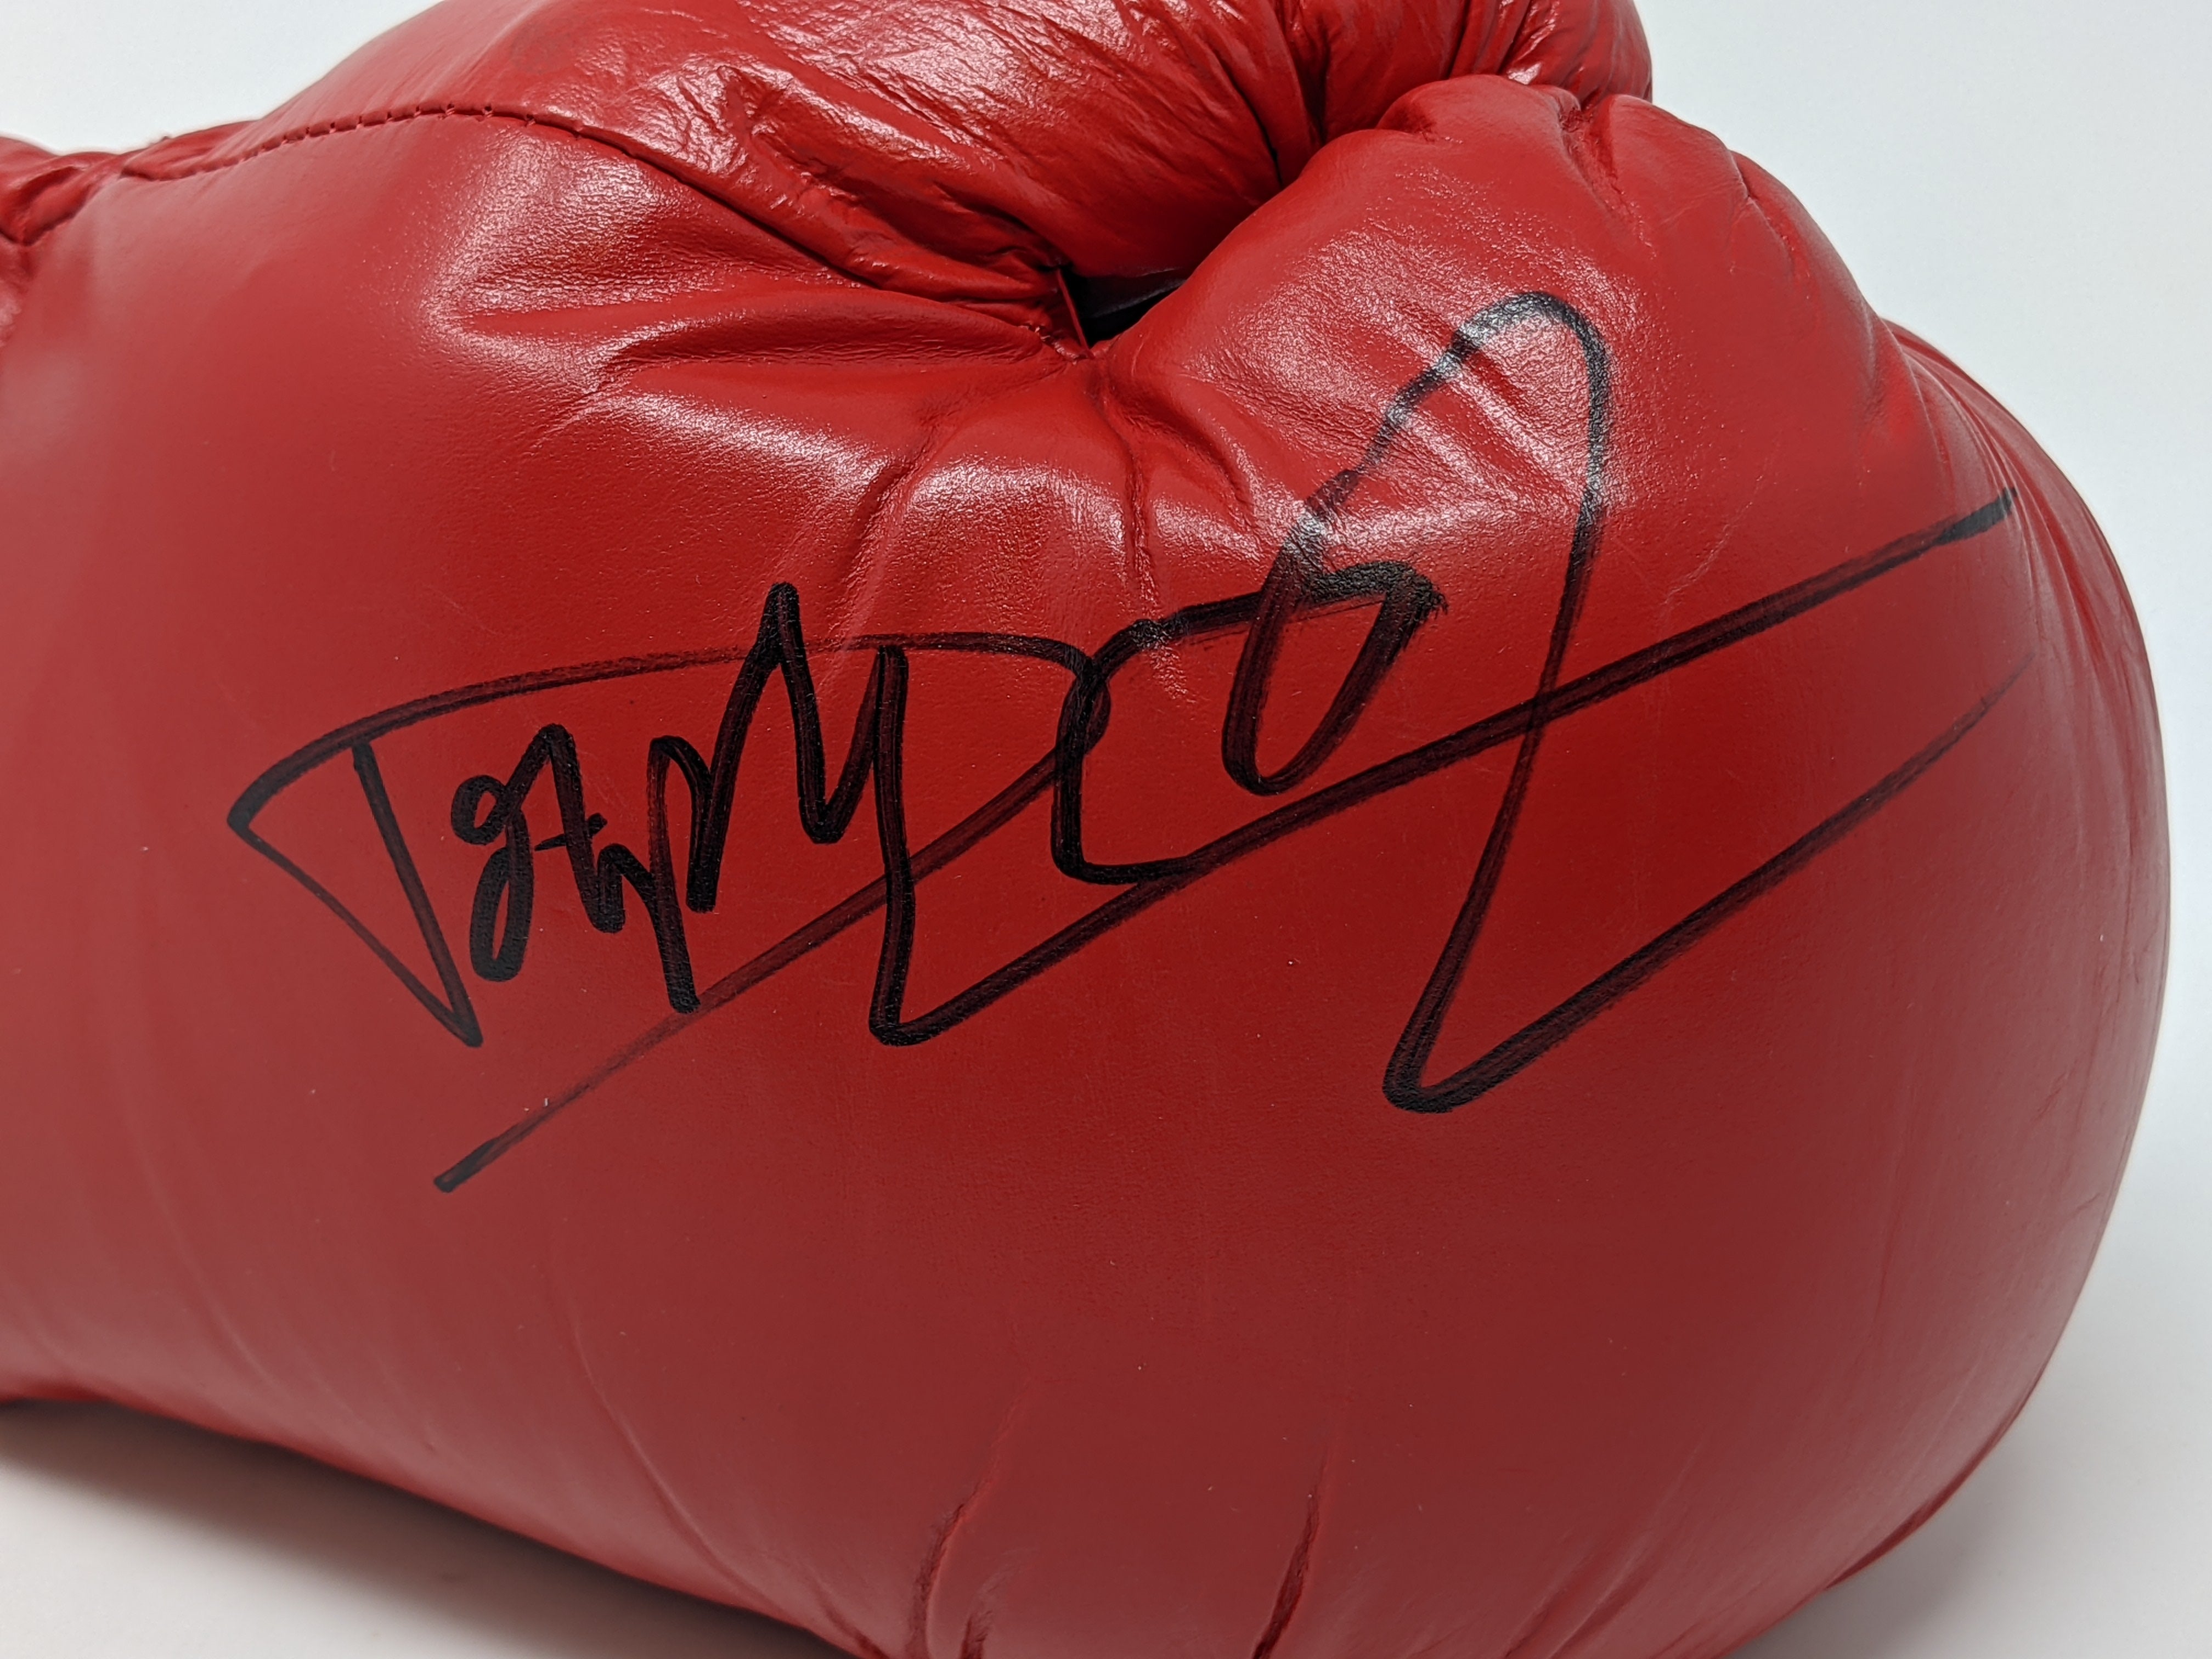 Dolph Lundgren Rocky IV Signed Boxing Glove JSA Certified Autograph